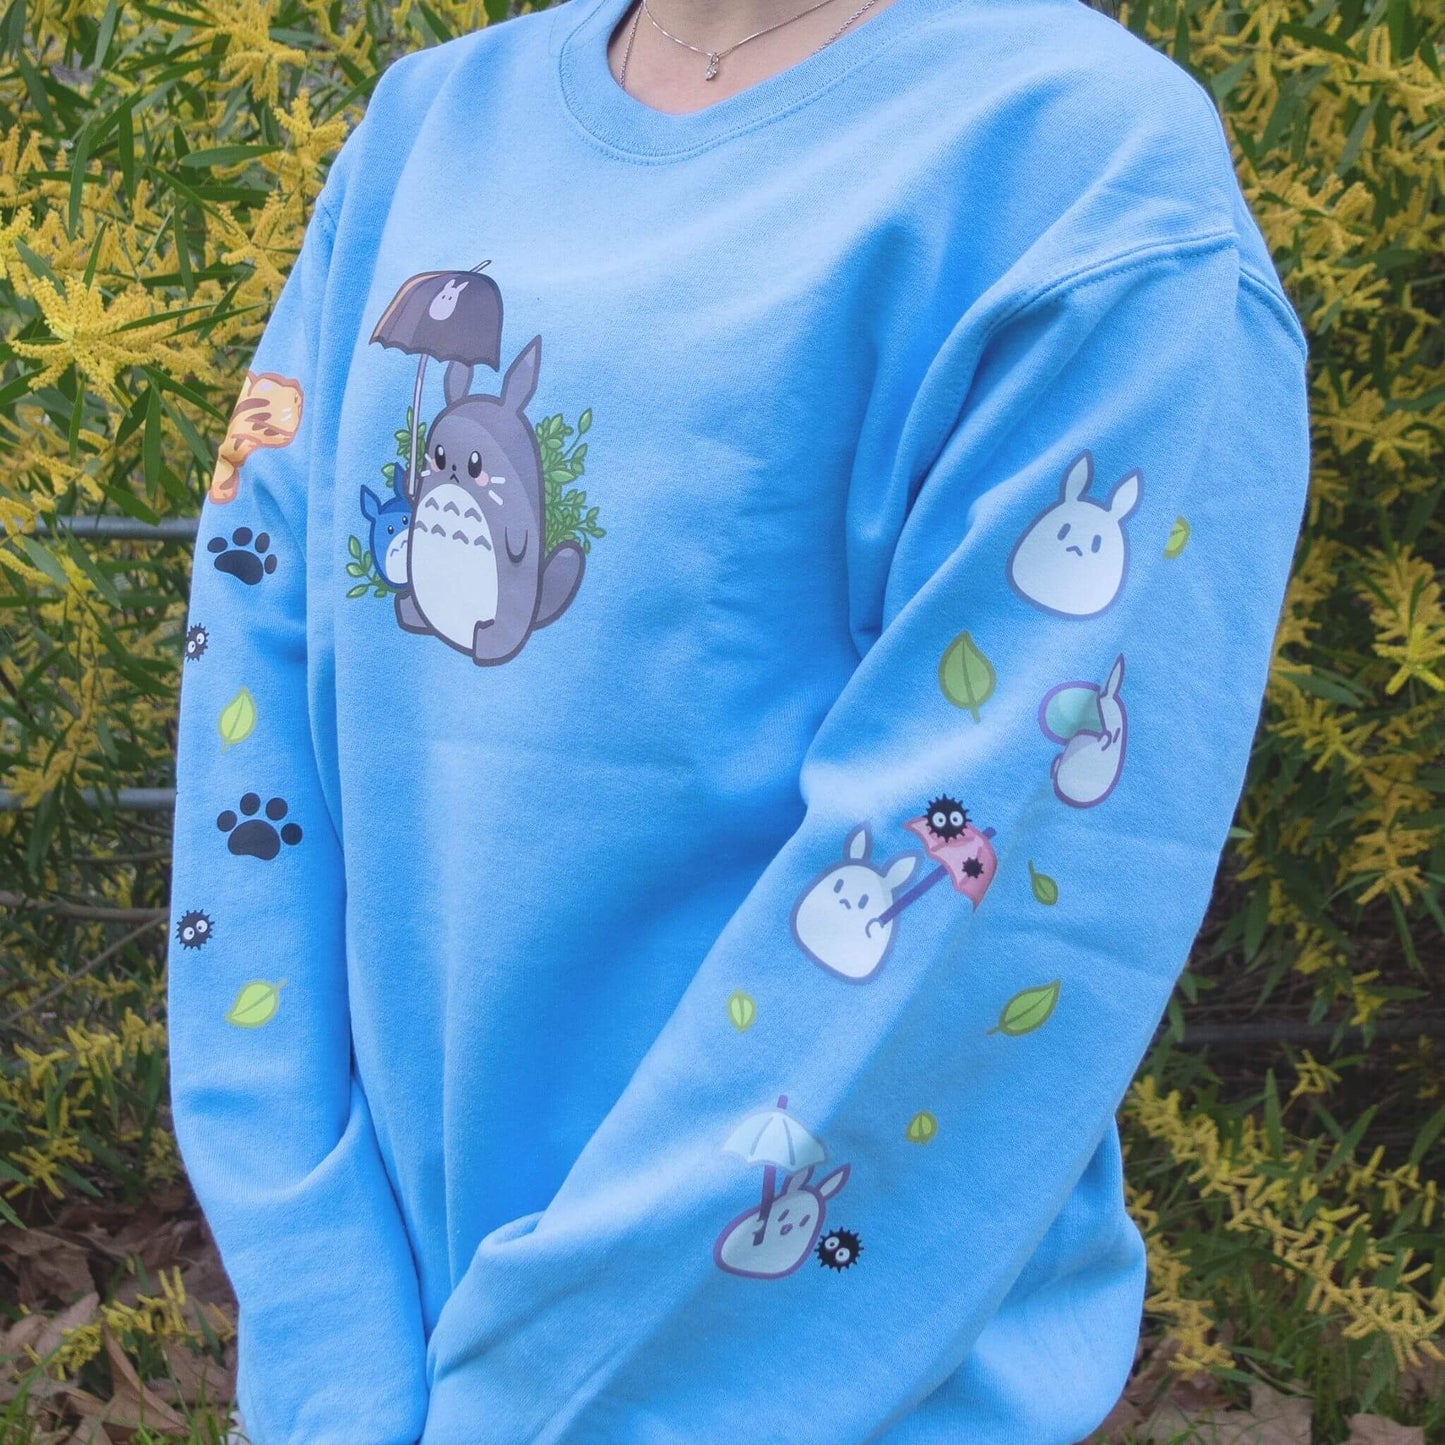 Cute Totoro and Friends Sweater